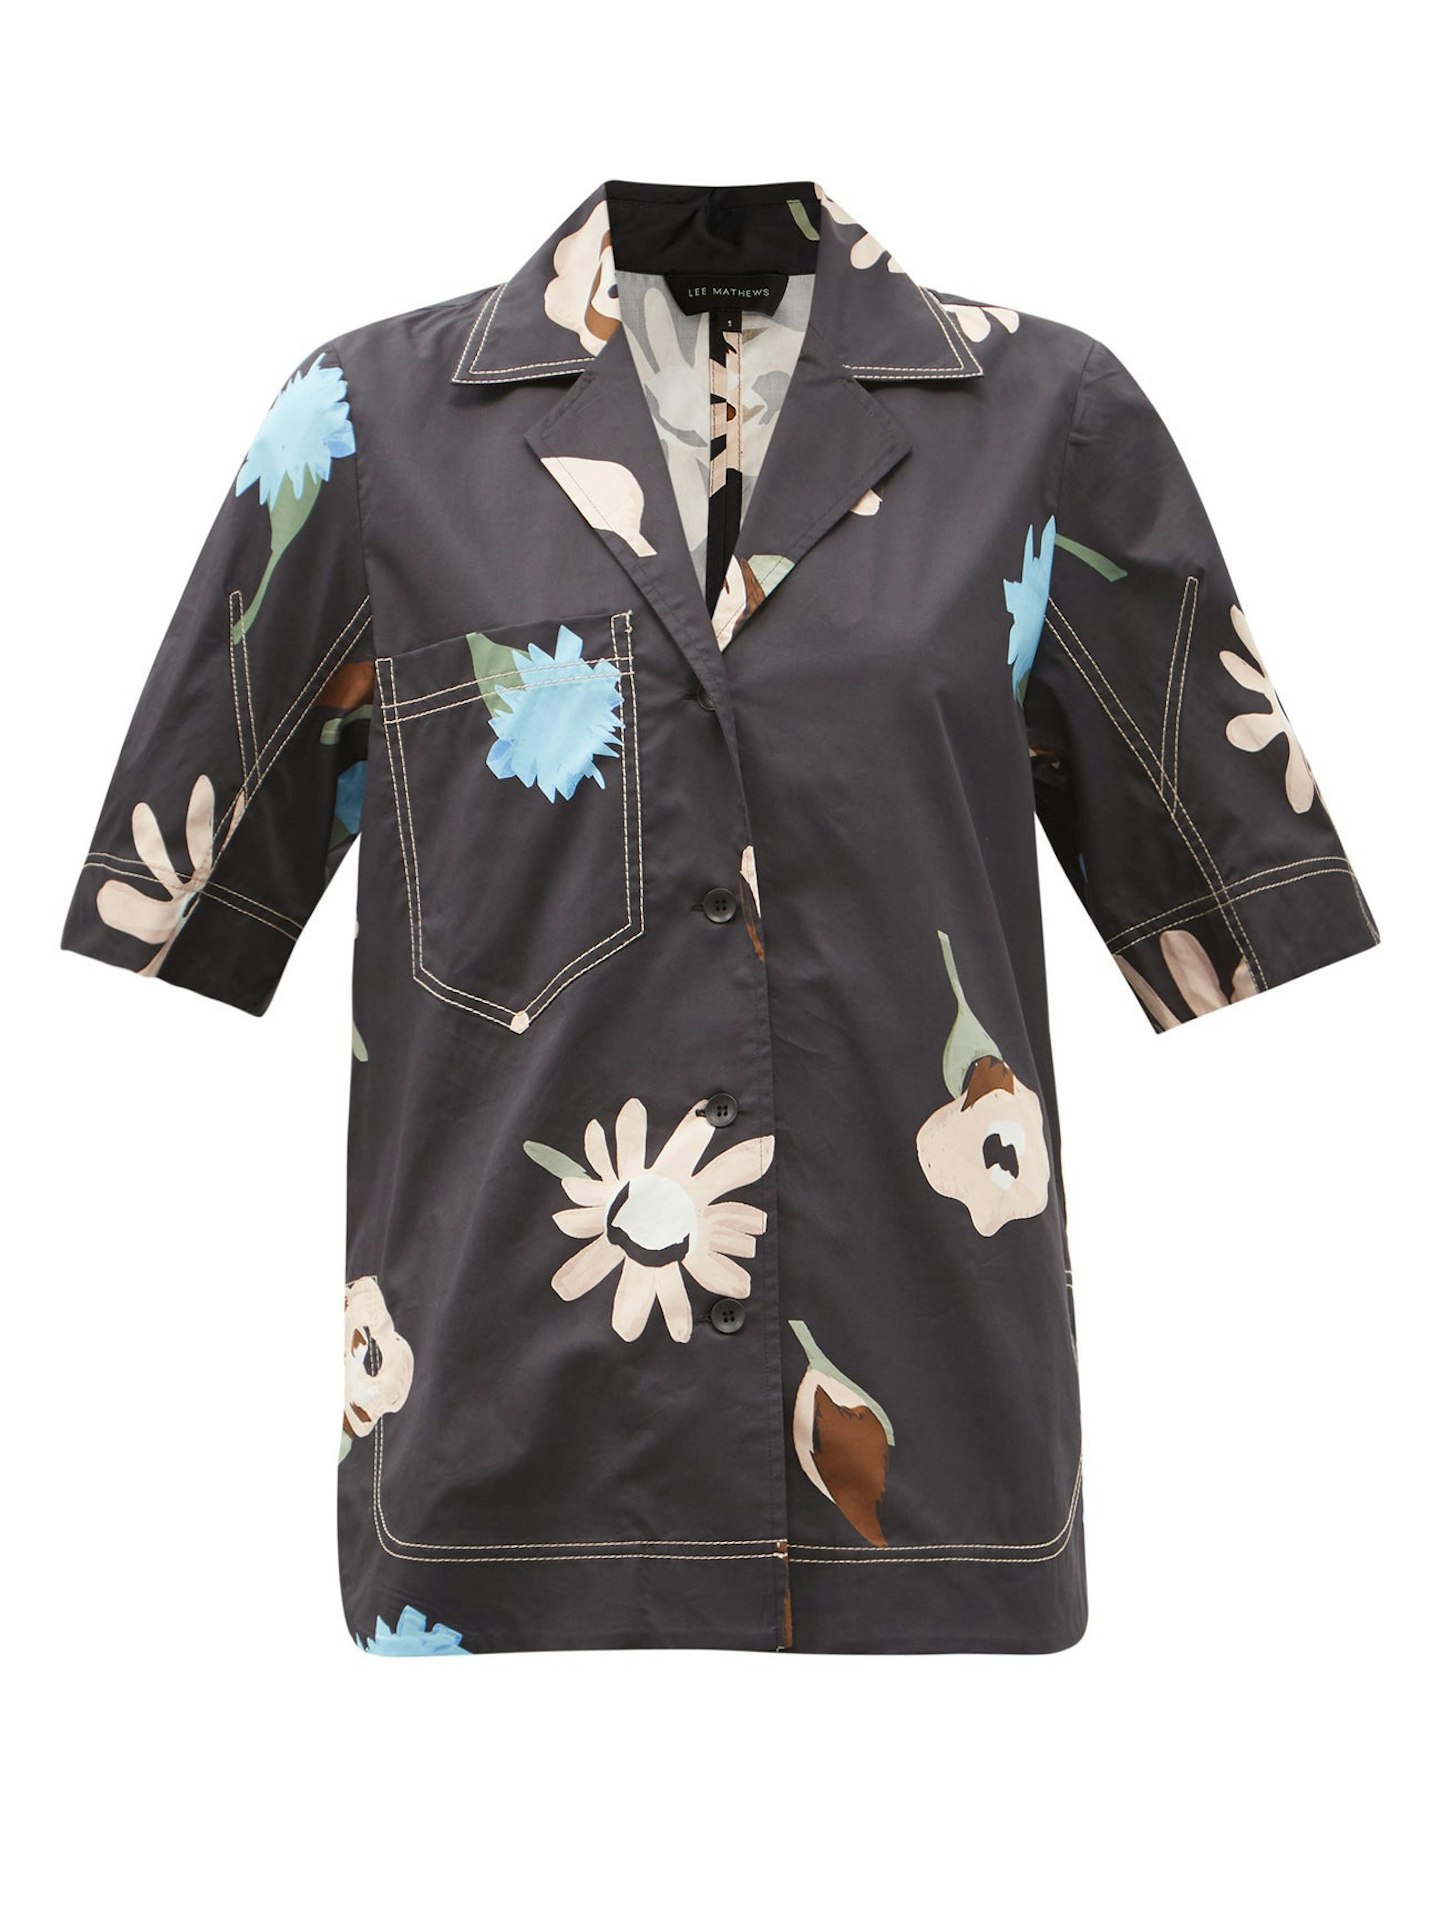 Lee Matthews, Bloomsbury Abstract-Print Cotton-Poplin Shirt, £259